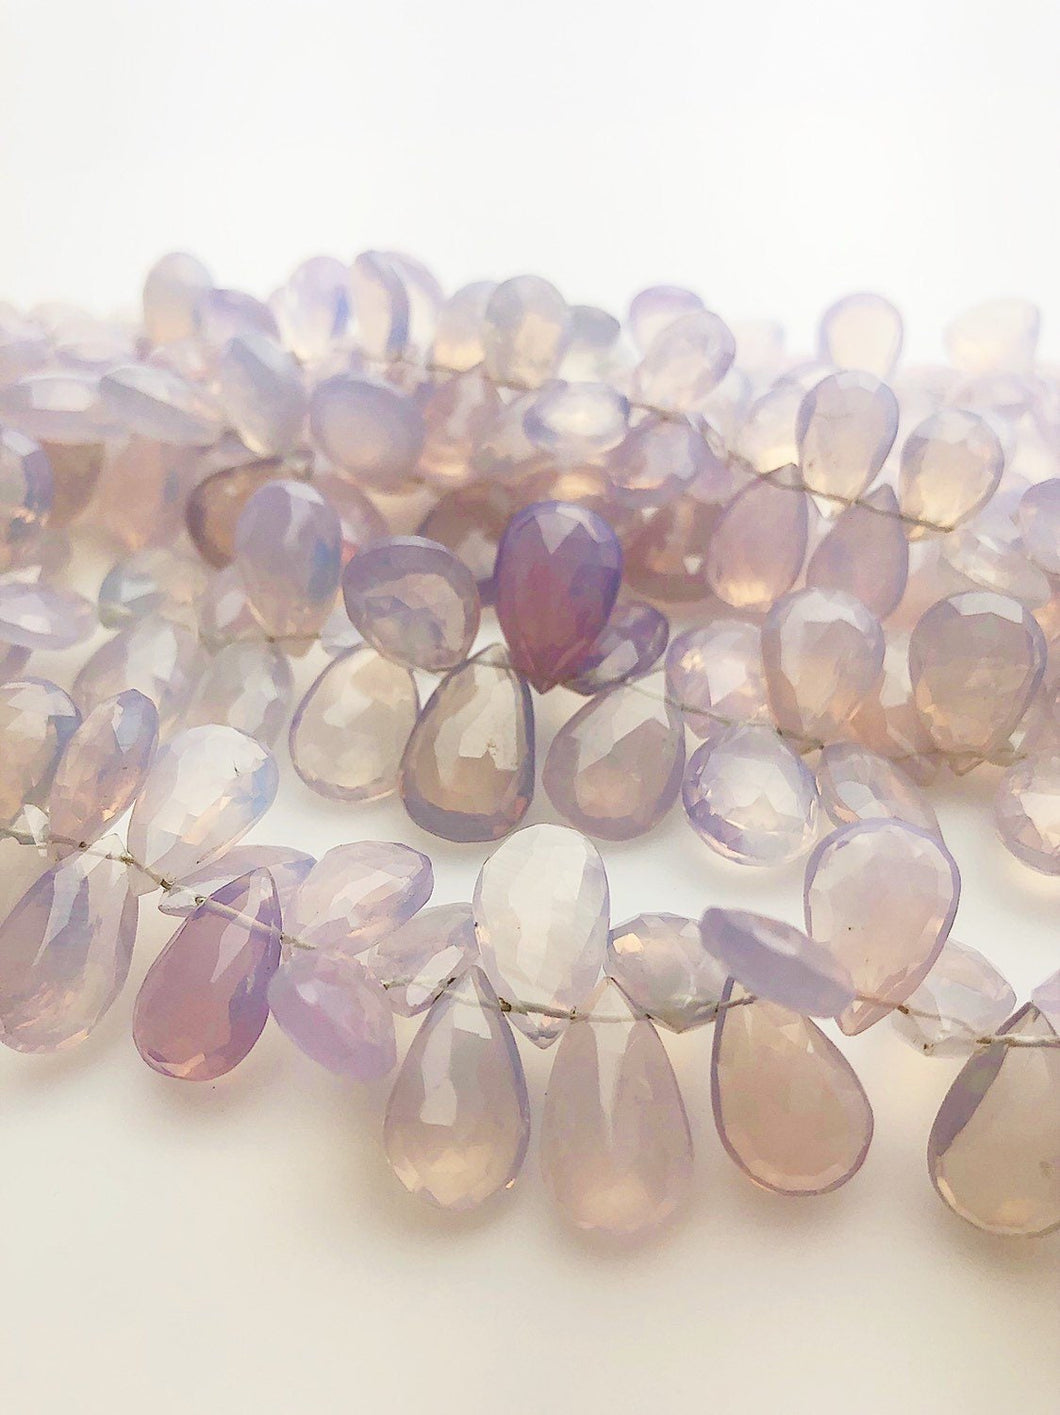 HALF OFF SALE - 10-15mm Lavender Quartz Flat Faceted Drop Gemstone Beads, Full Strand, Semi Precious Gemstone, 8